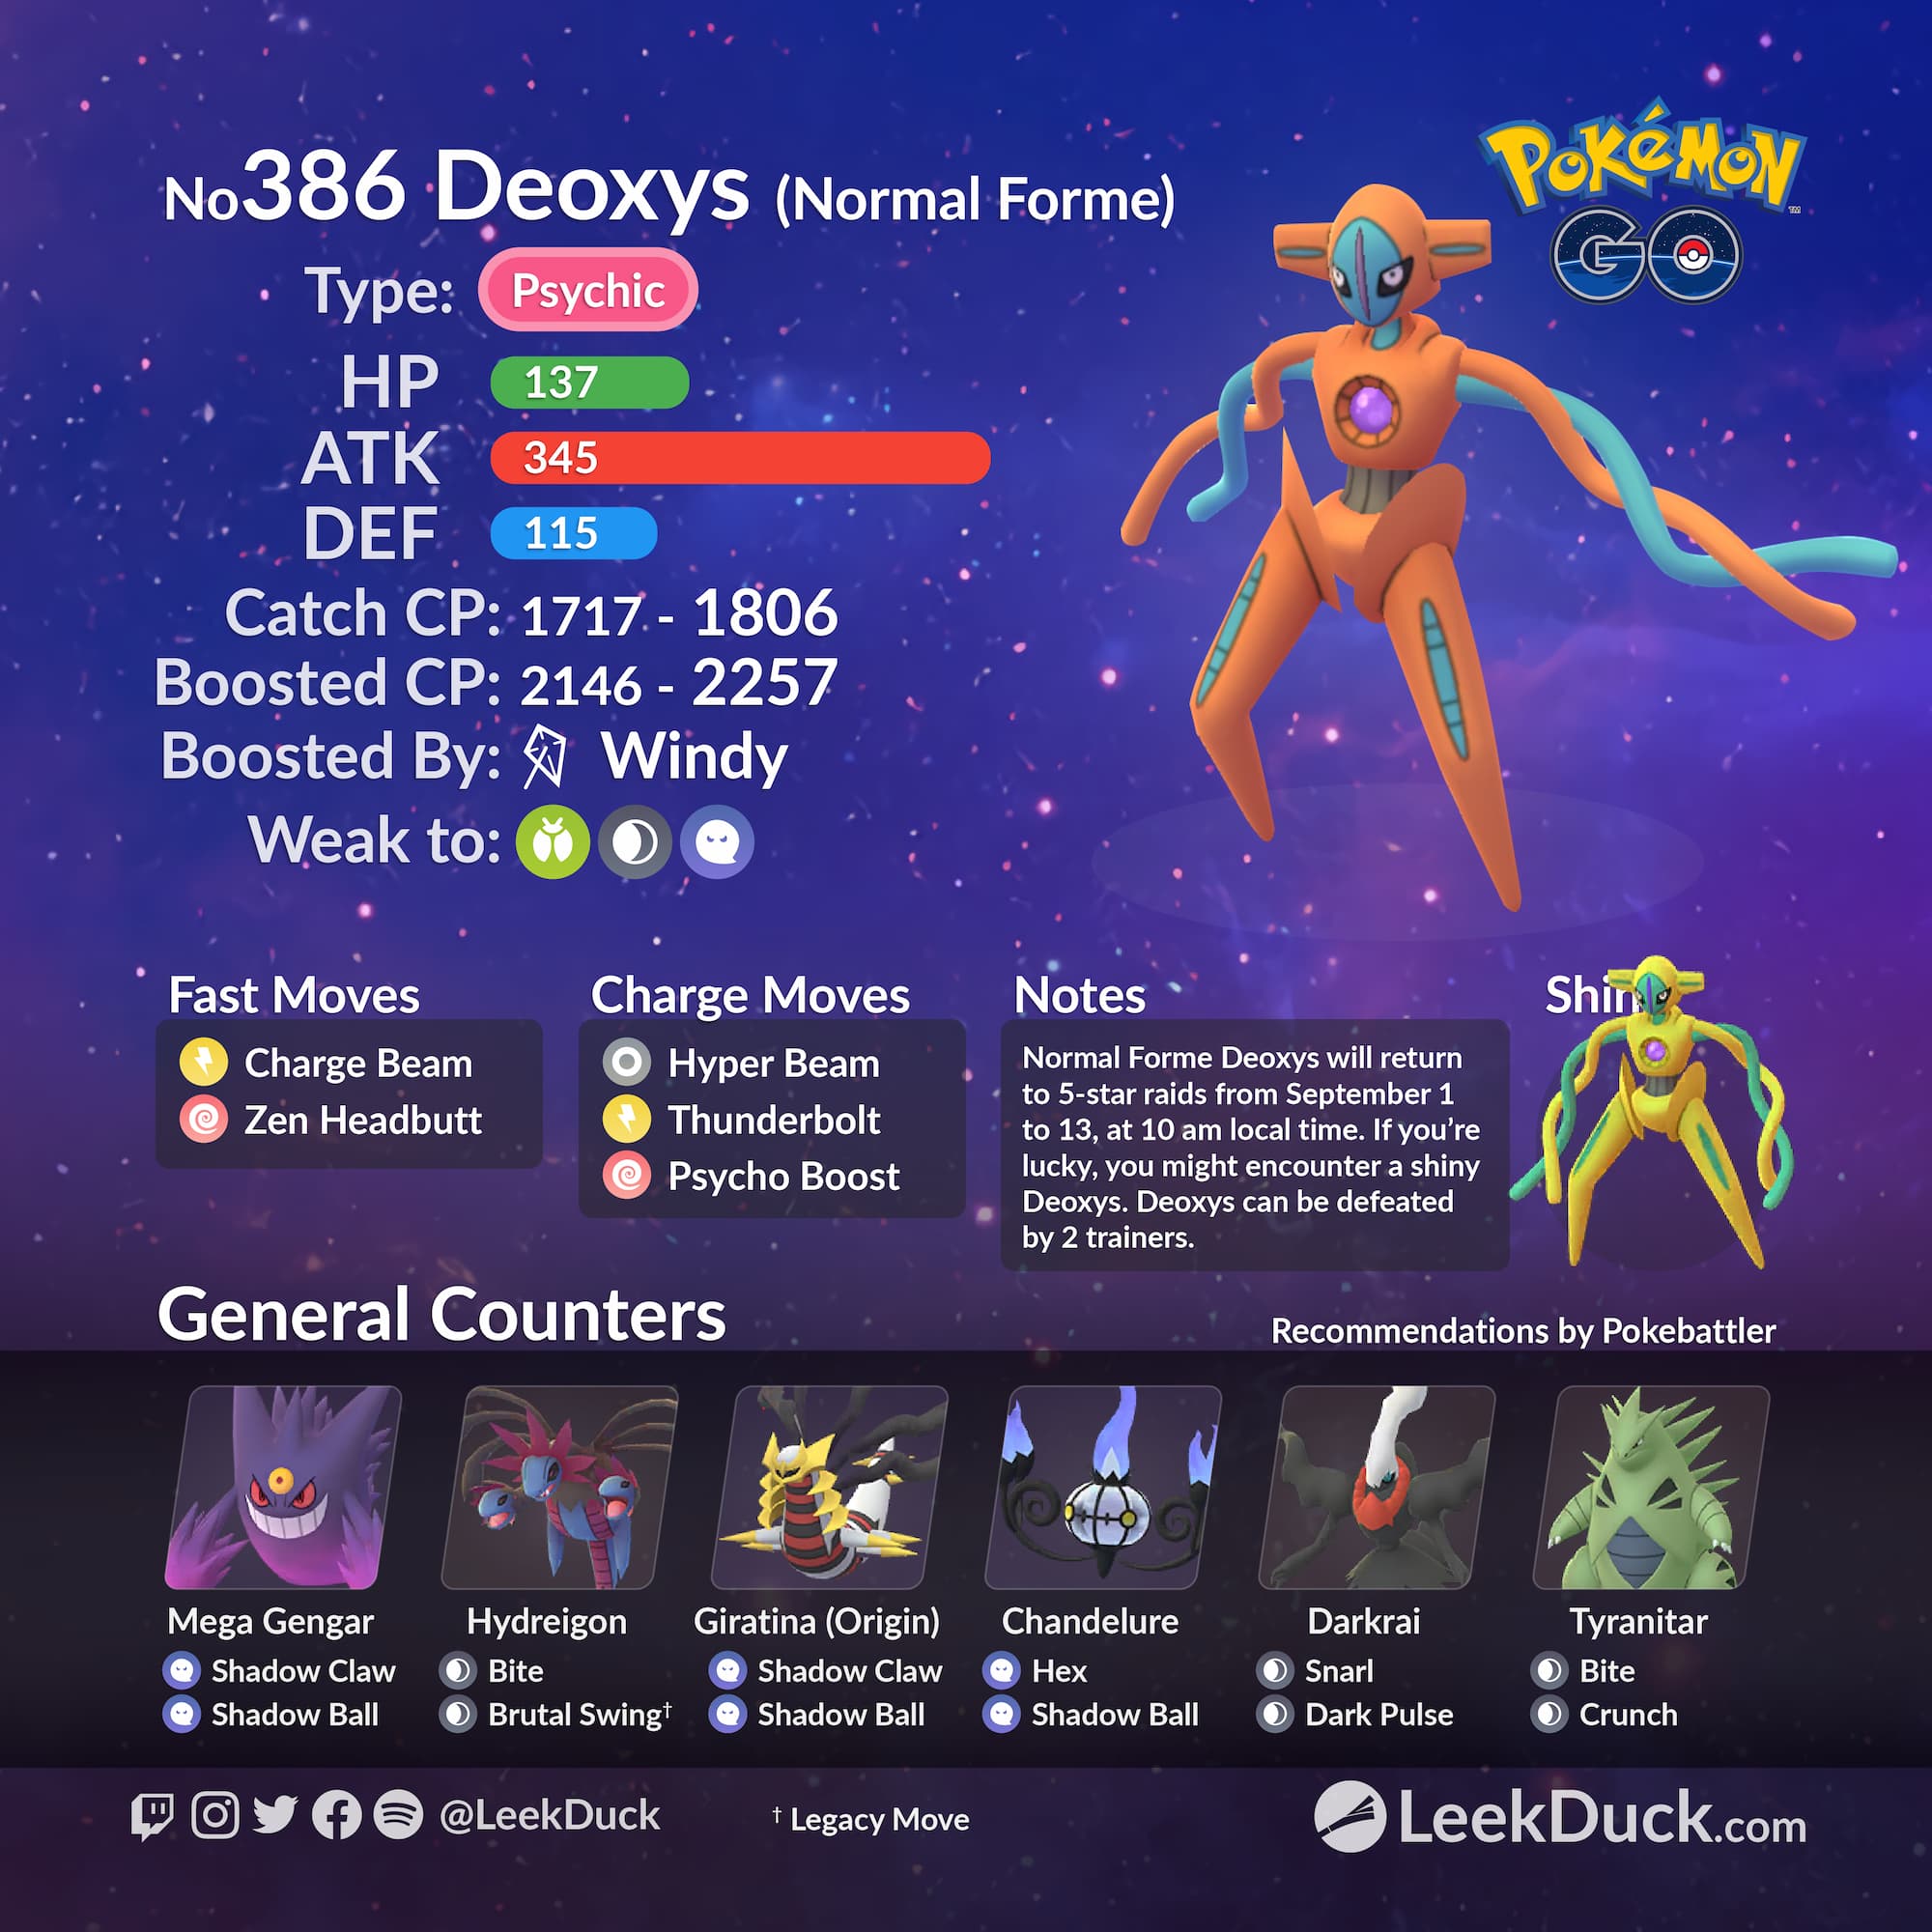 Pokemon GO Deoxys Forms, Raid, and Shiny Guide - Pokemon GO Guide - IGN